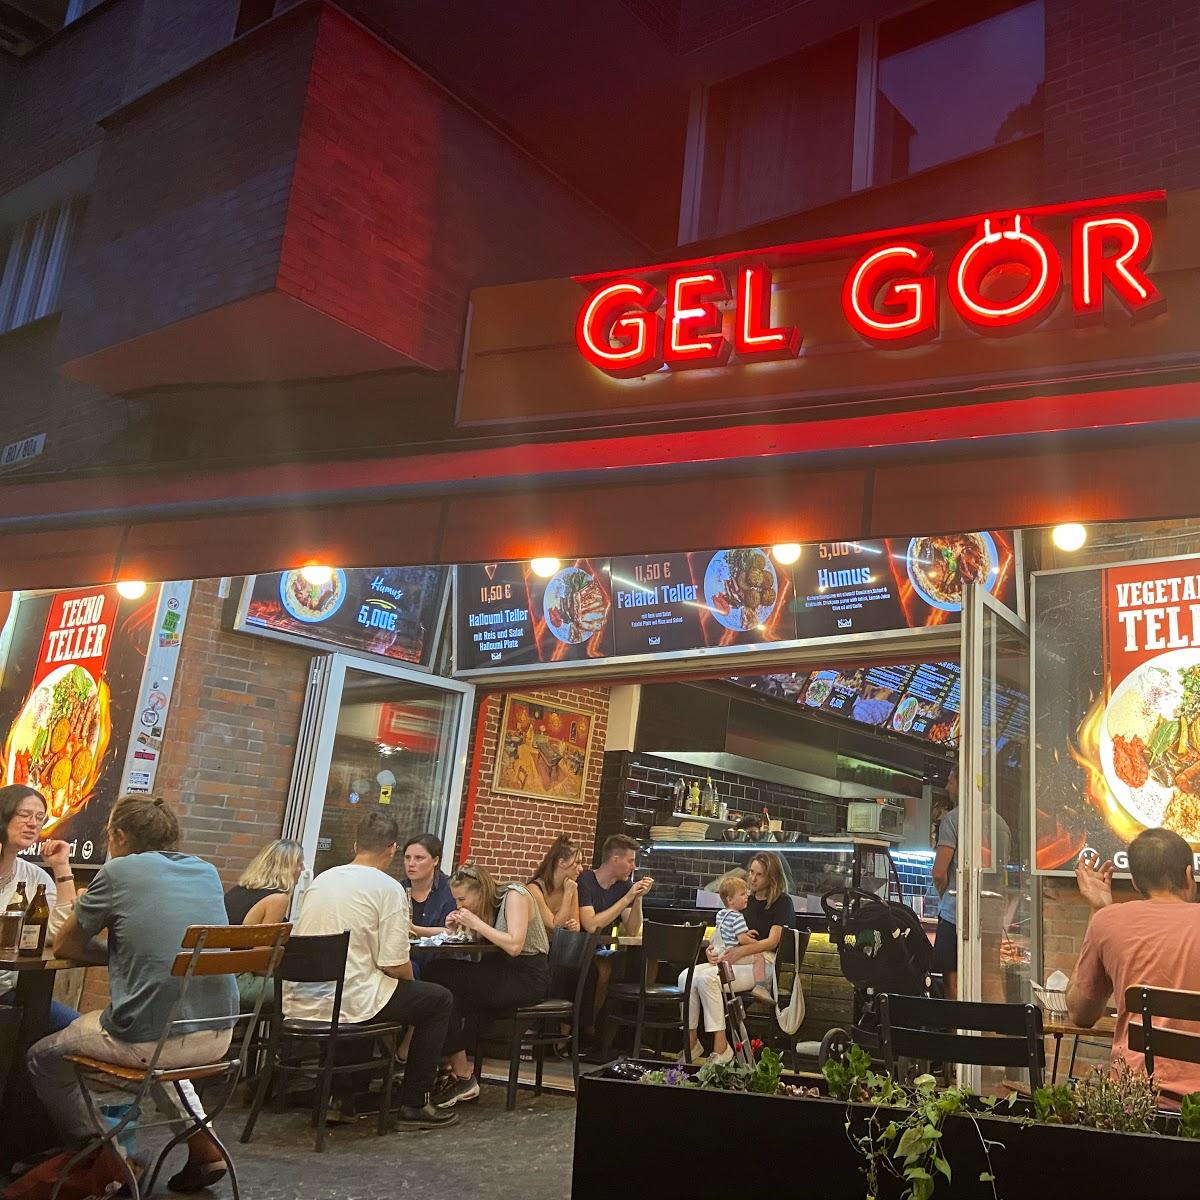 Restaurant "Gel Gör" in Berlin